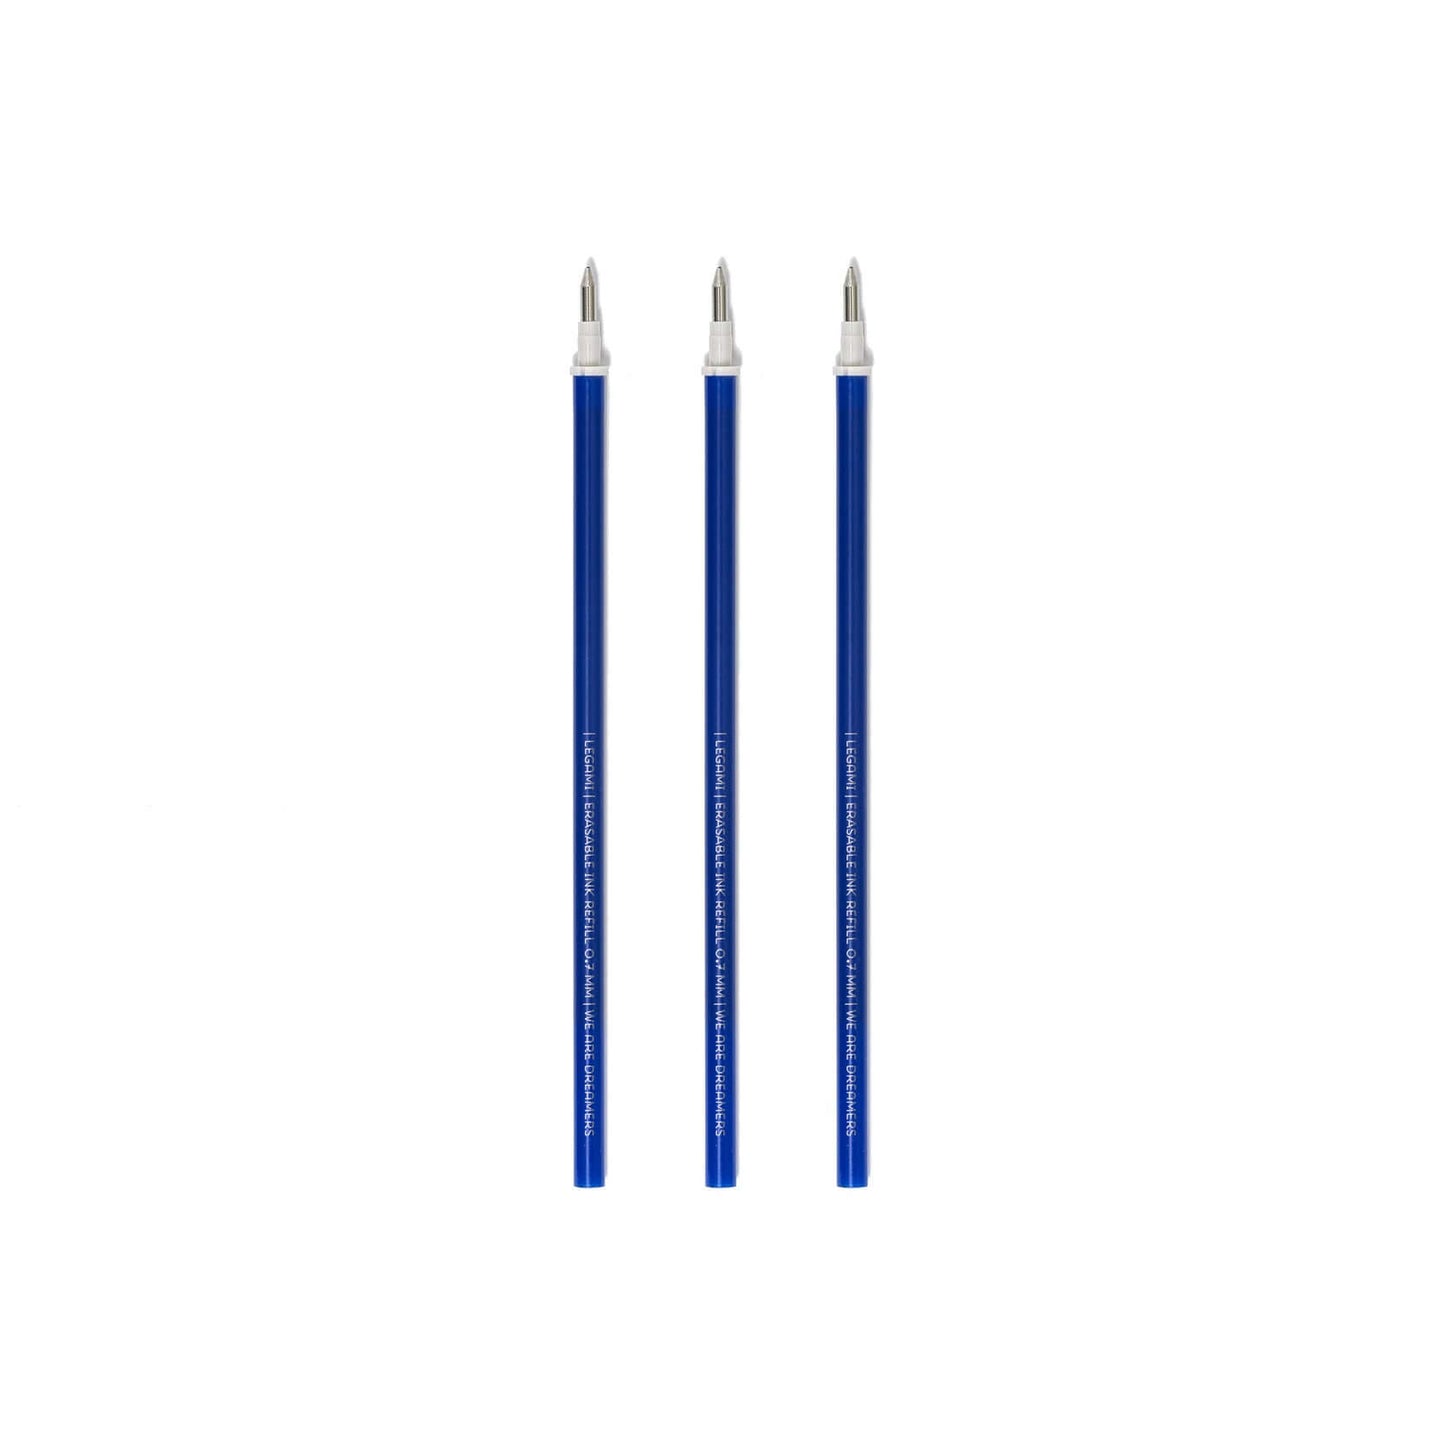 3 Blue Legami Erasable Pen Refills without packaging